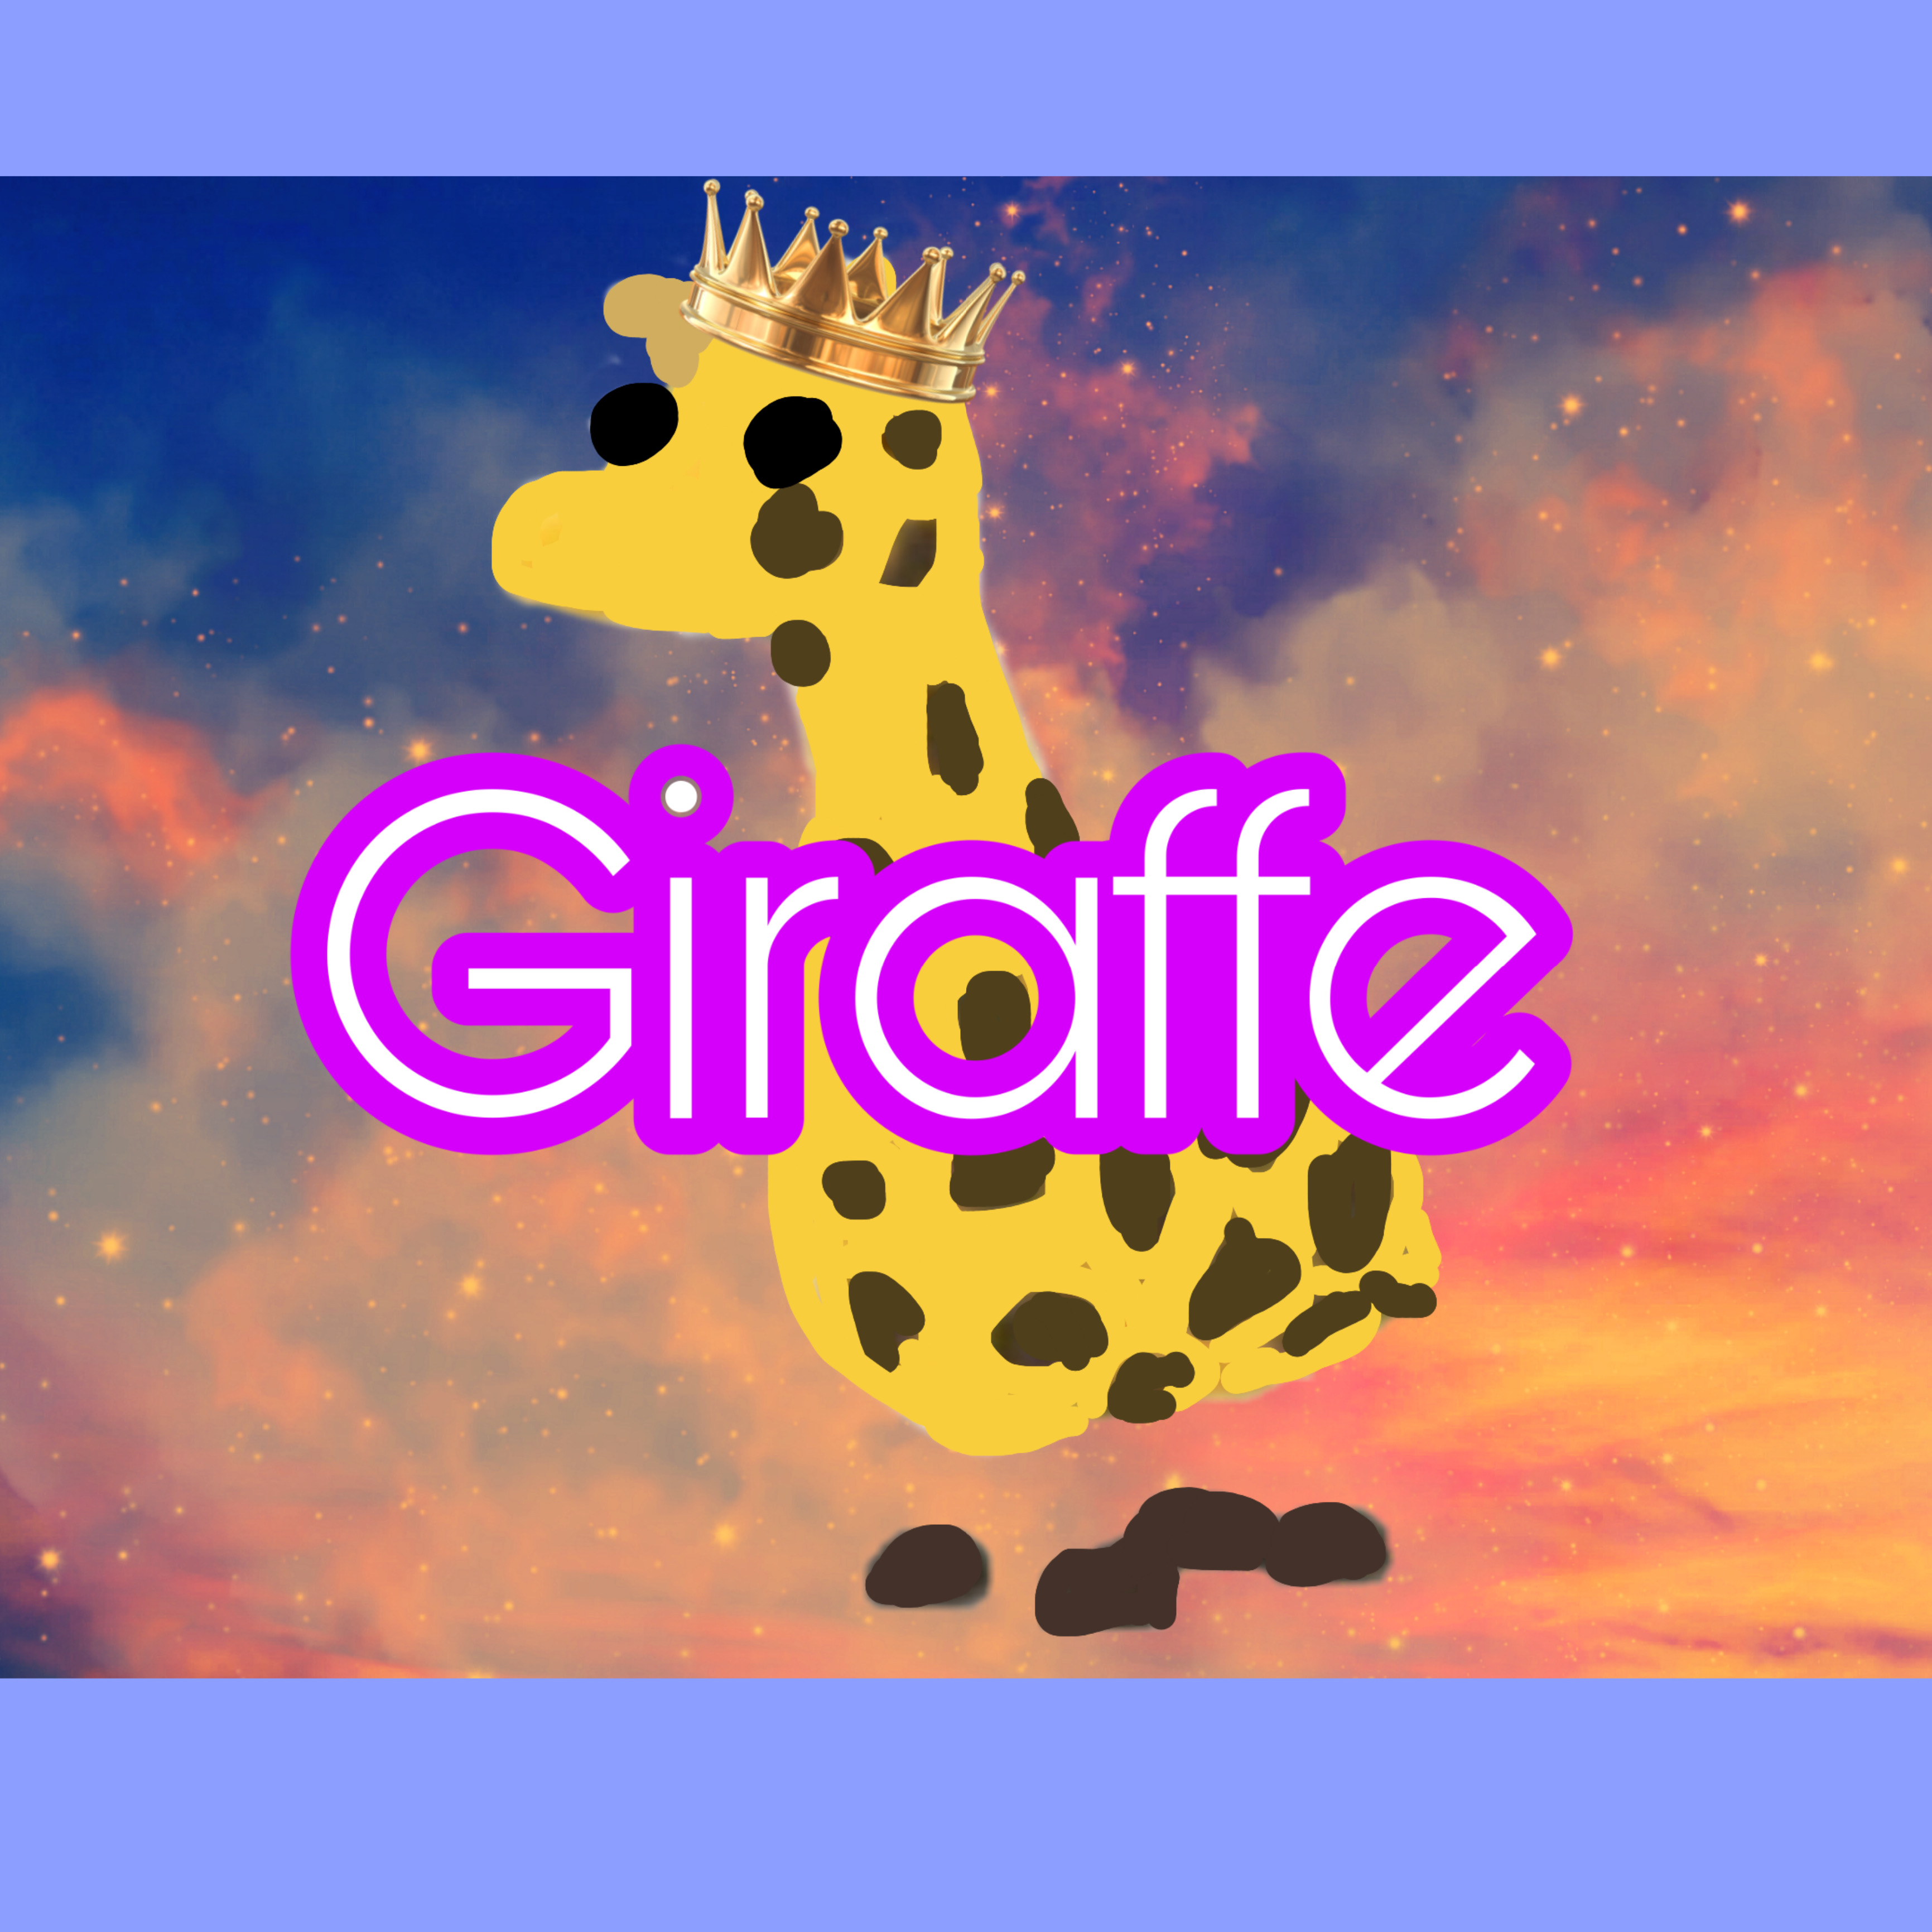 Adoptme Giraffe Pets Image By Mac N Cheese